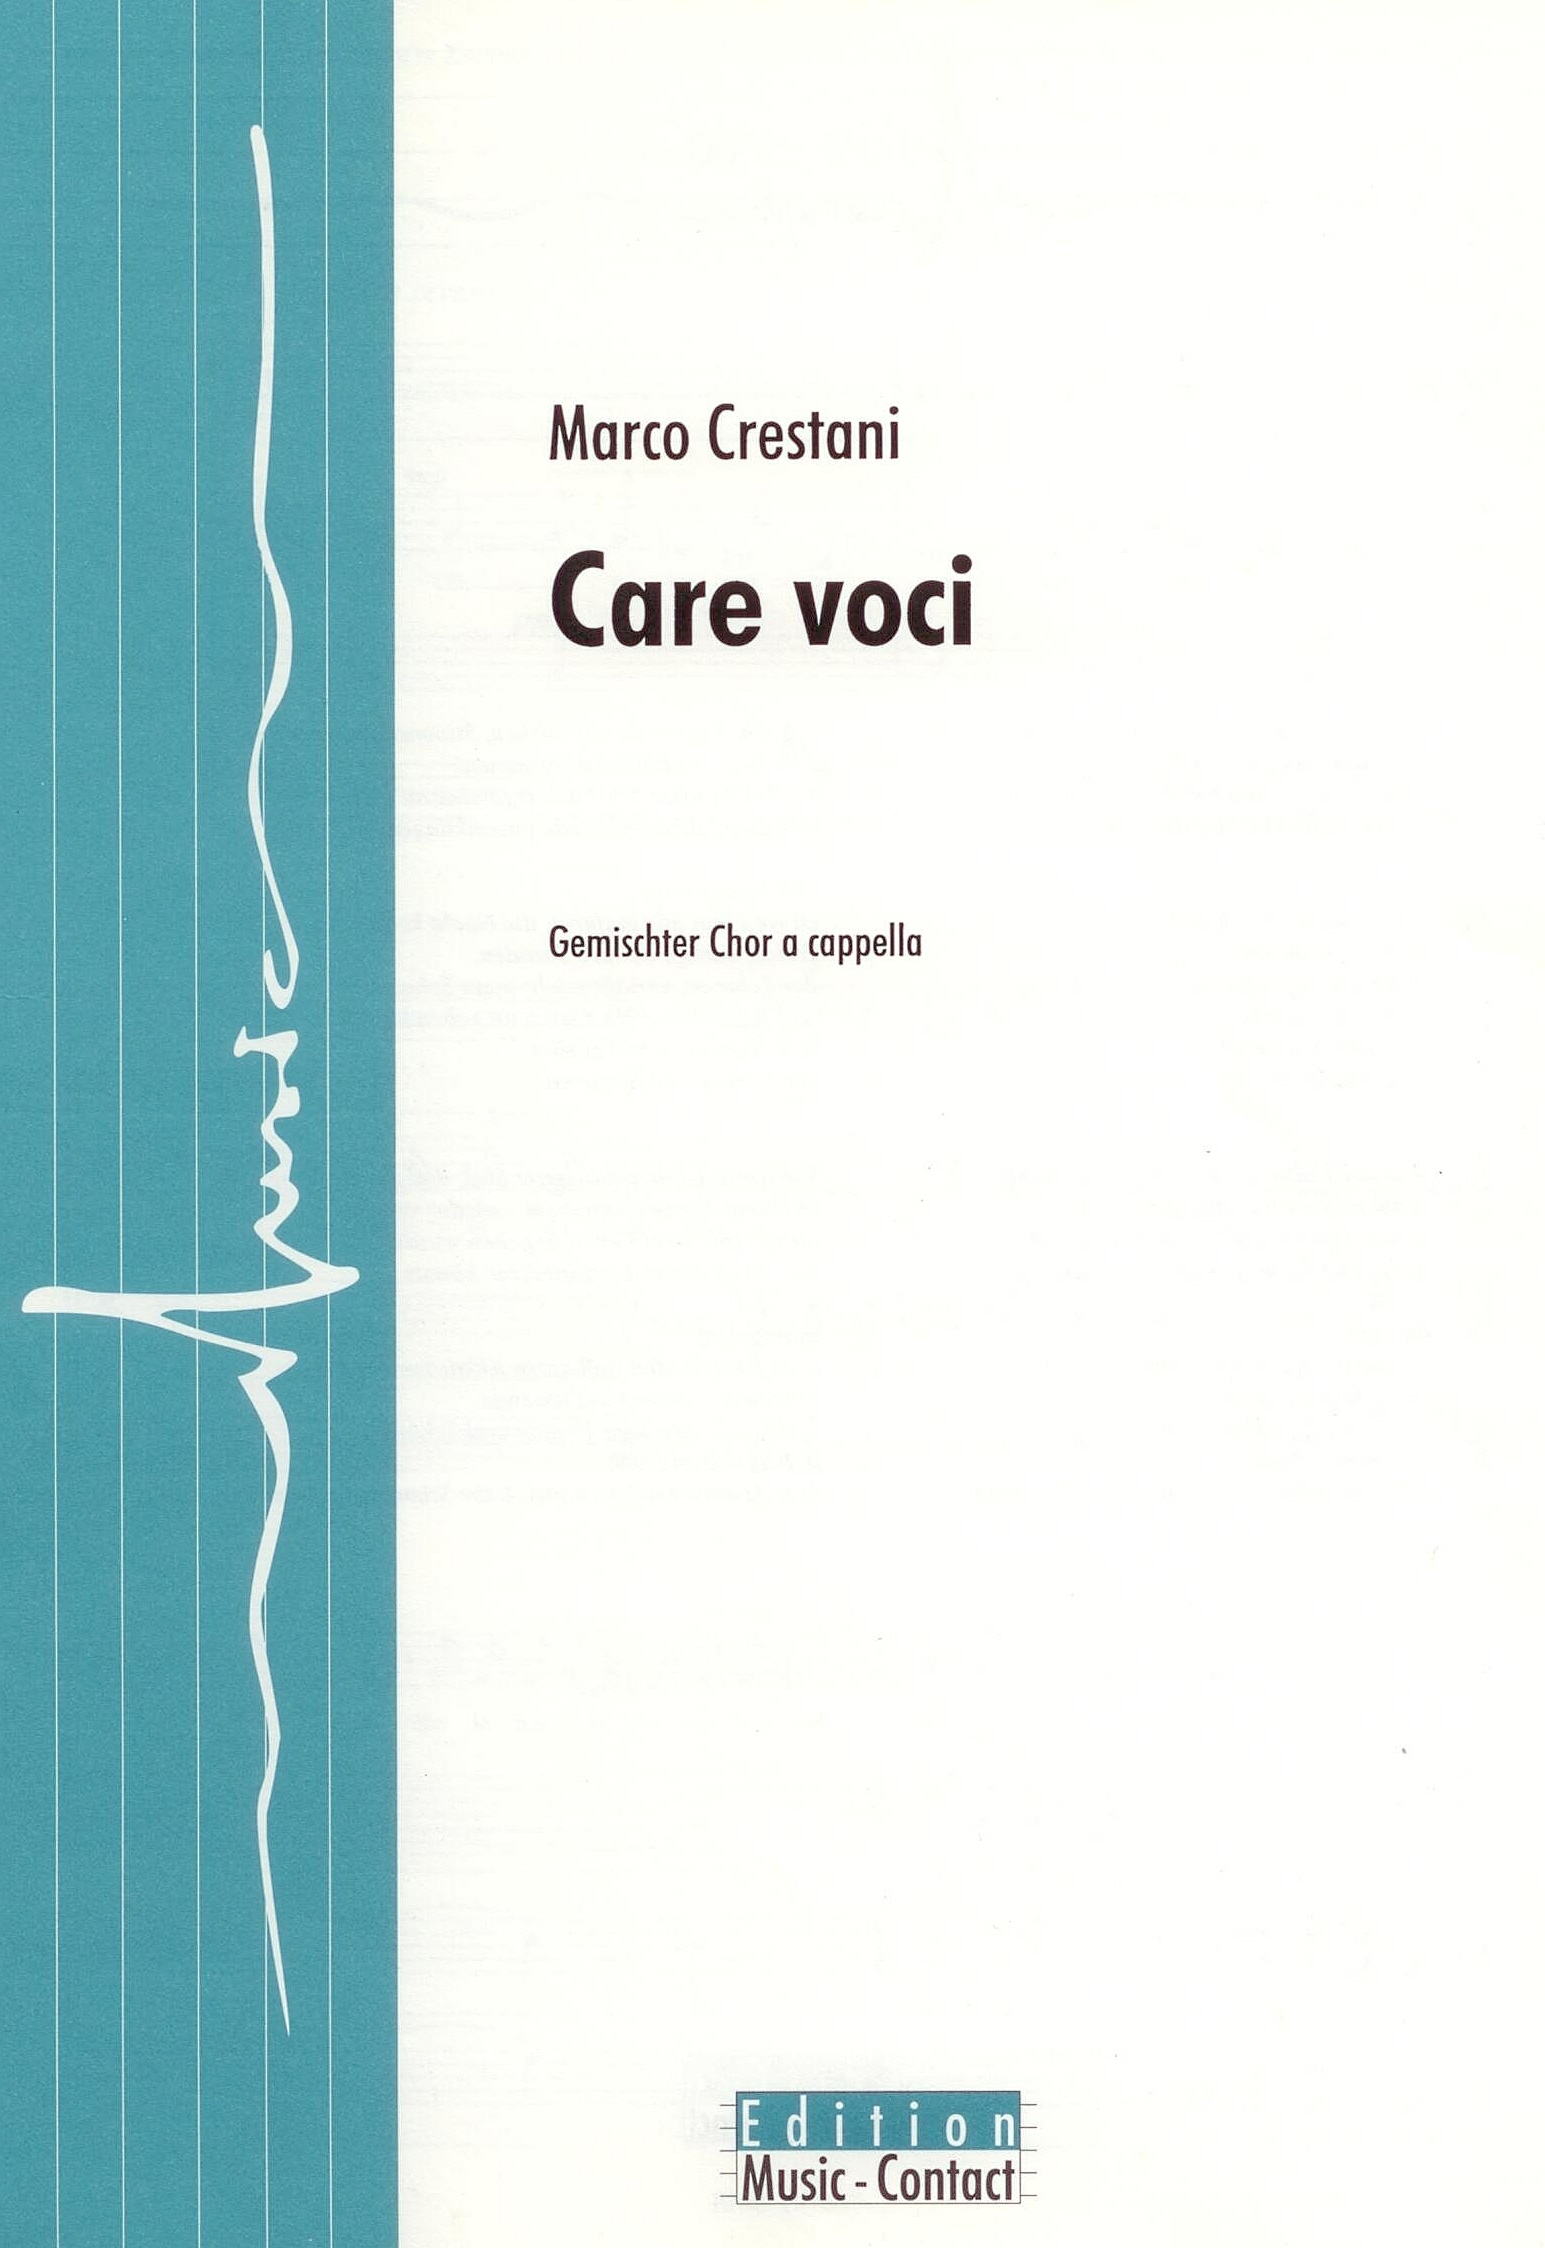 Care voci - Show sample score